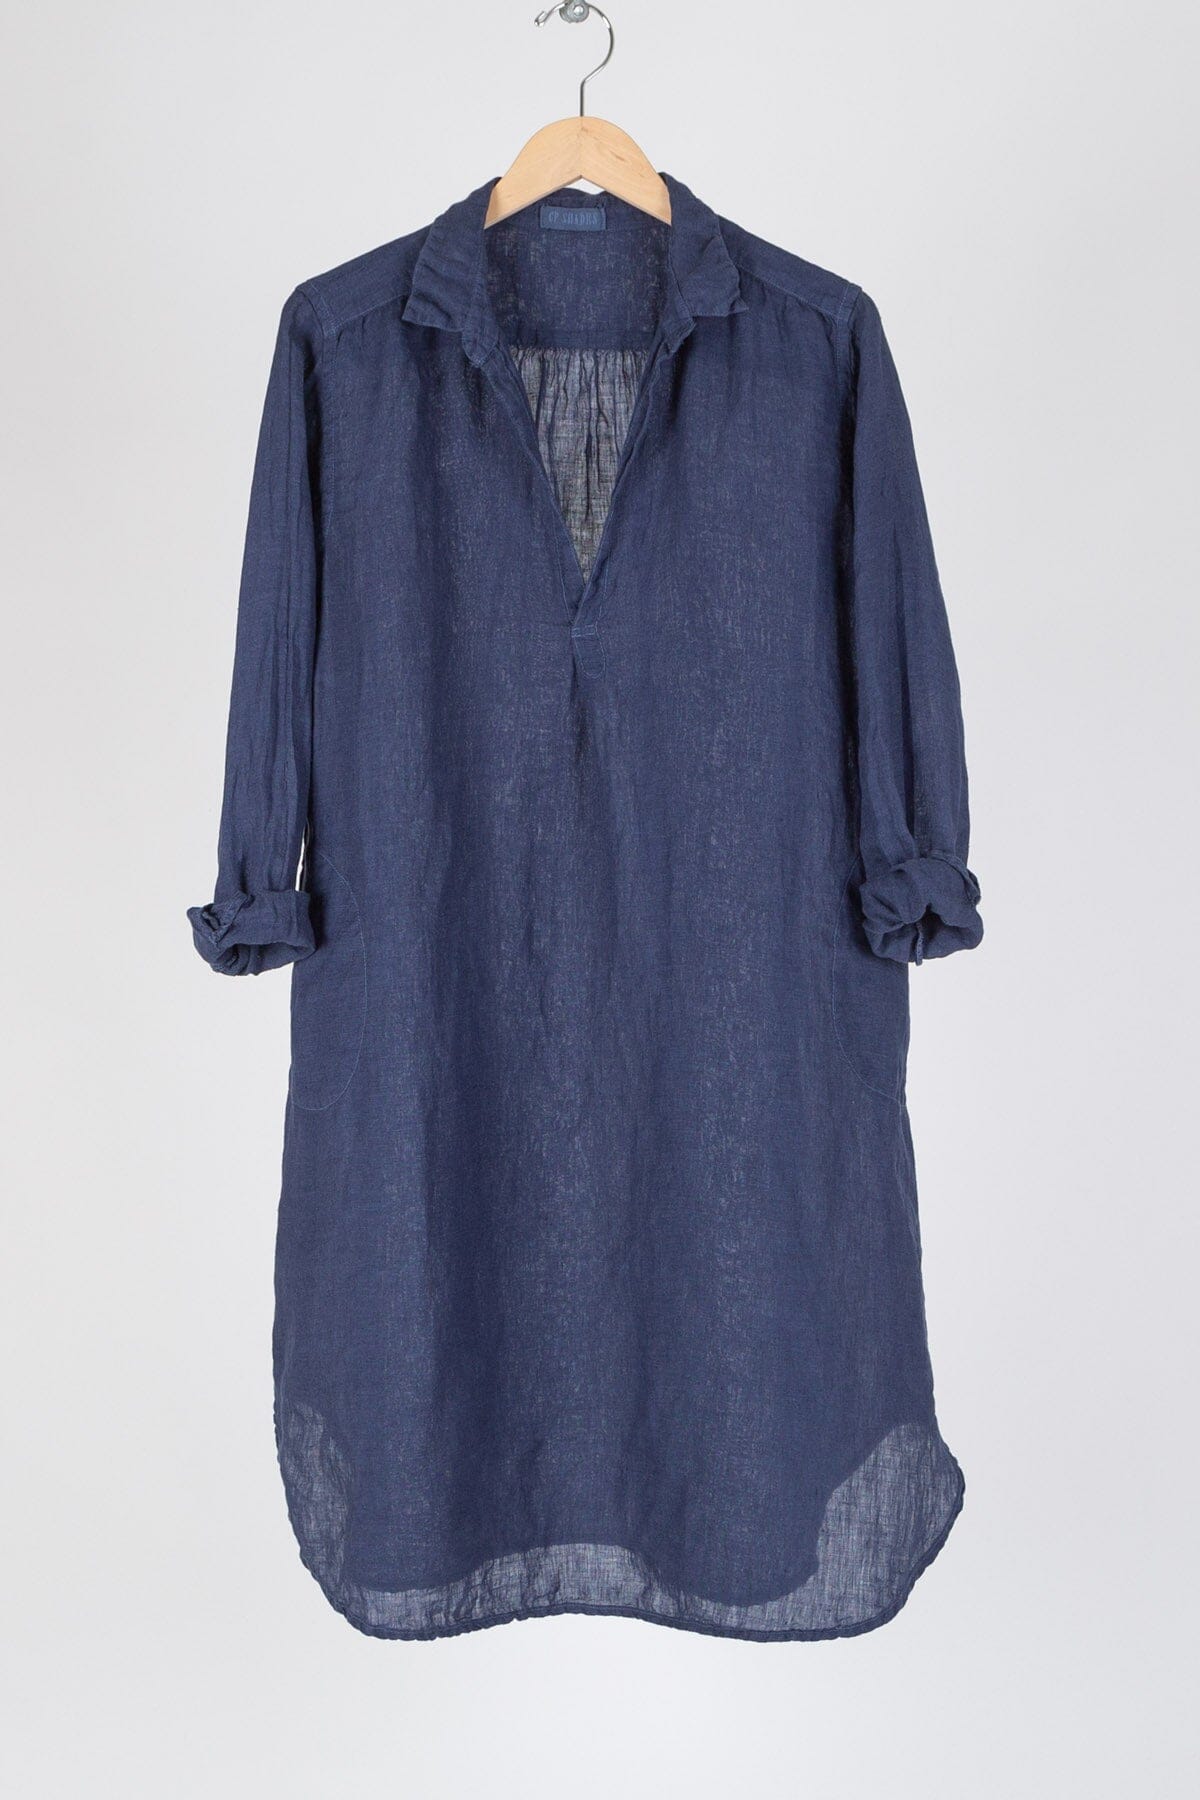 Lara - Iridescent Linen Sale S90 - Iridescent Sale Dresses/Skirts CP Shades midnight 162